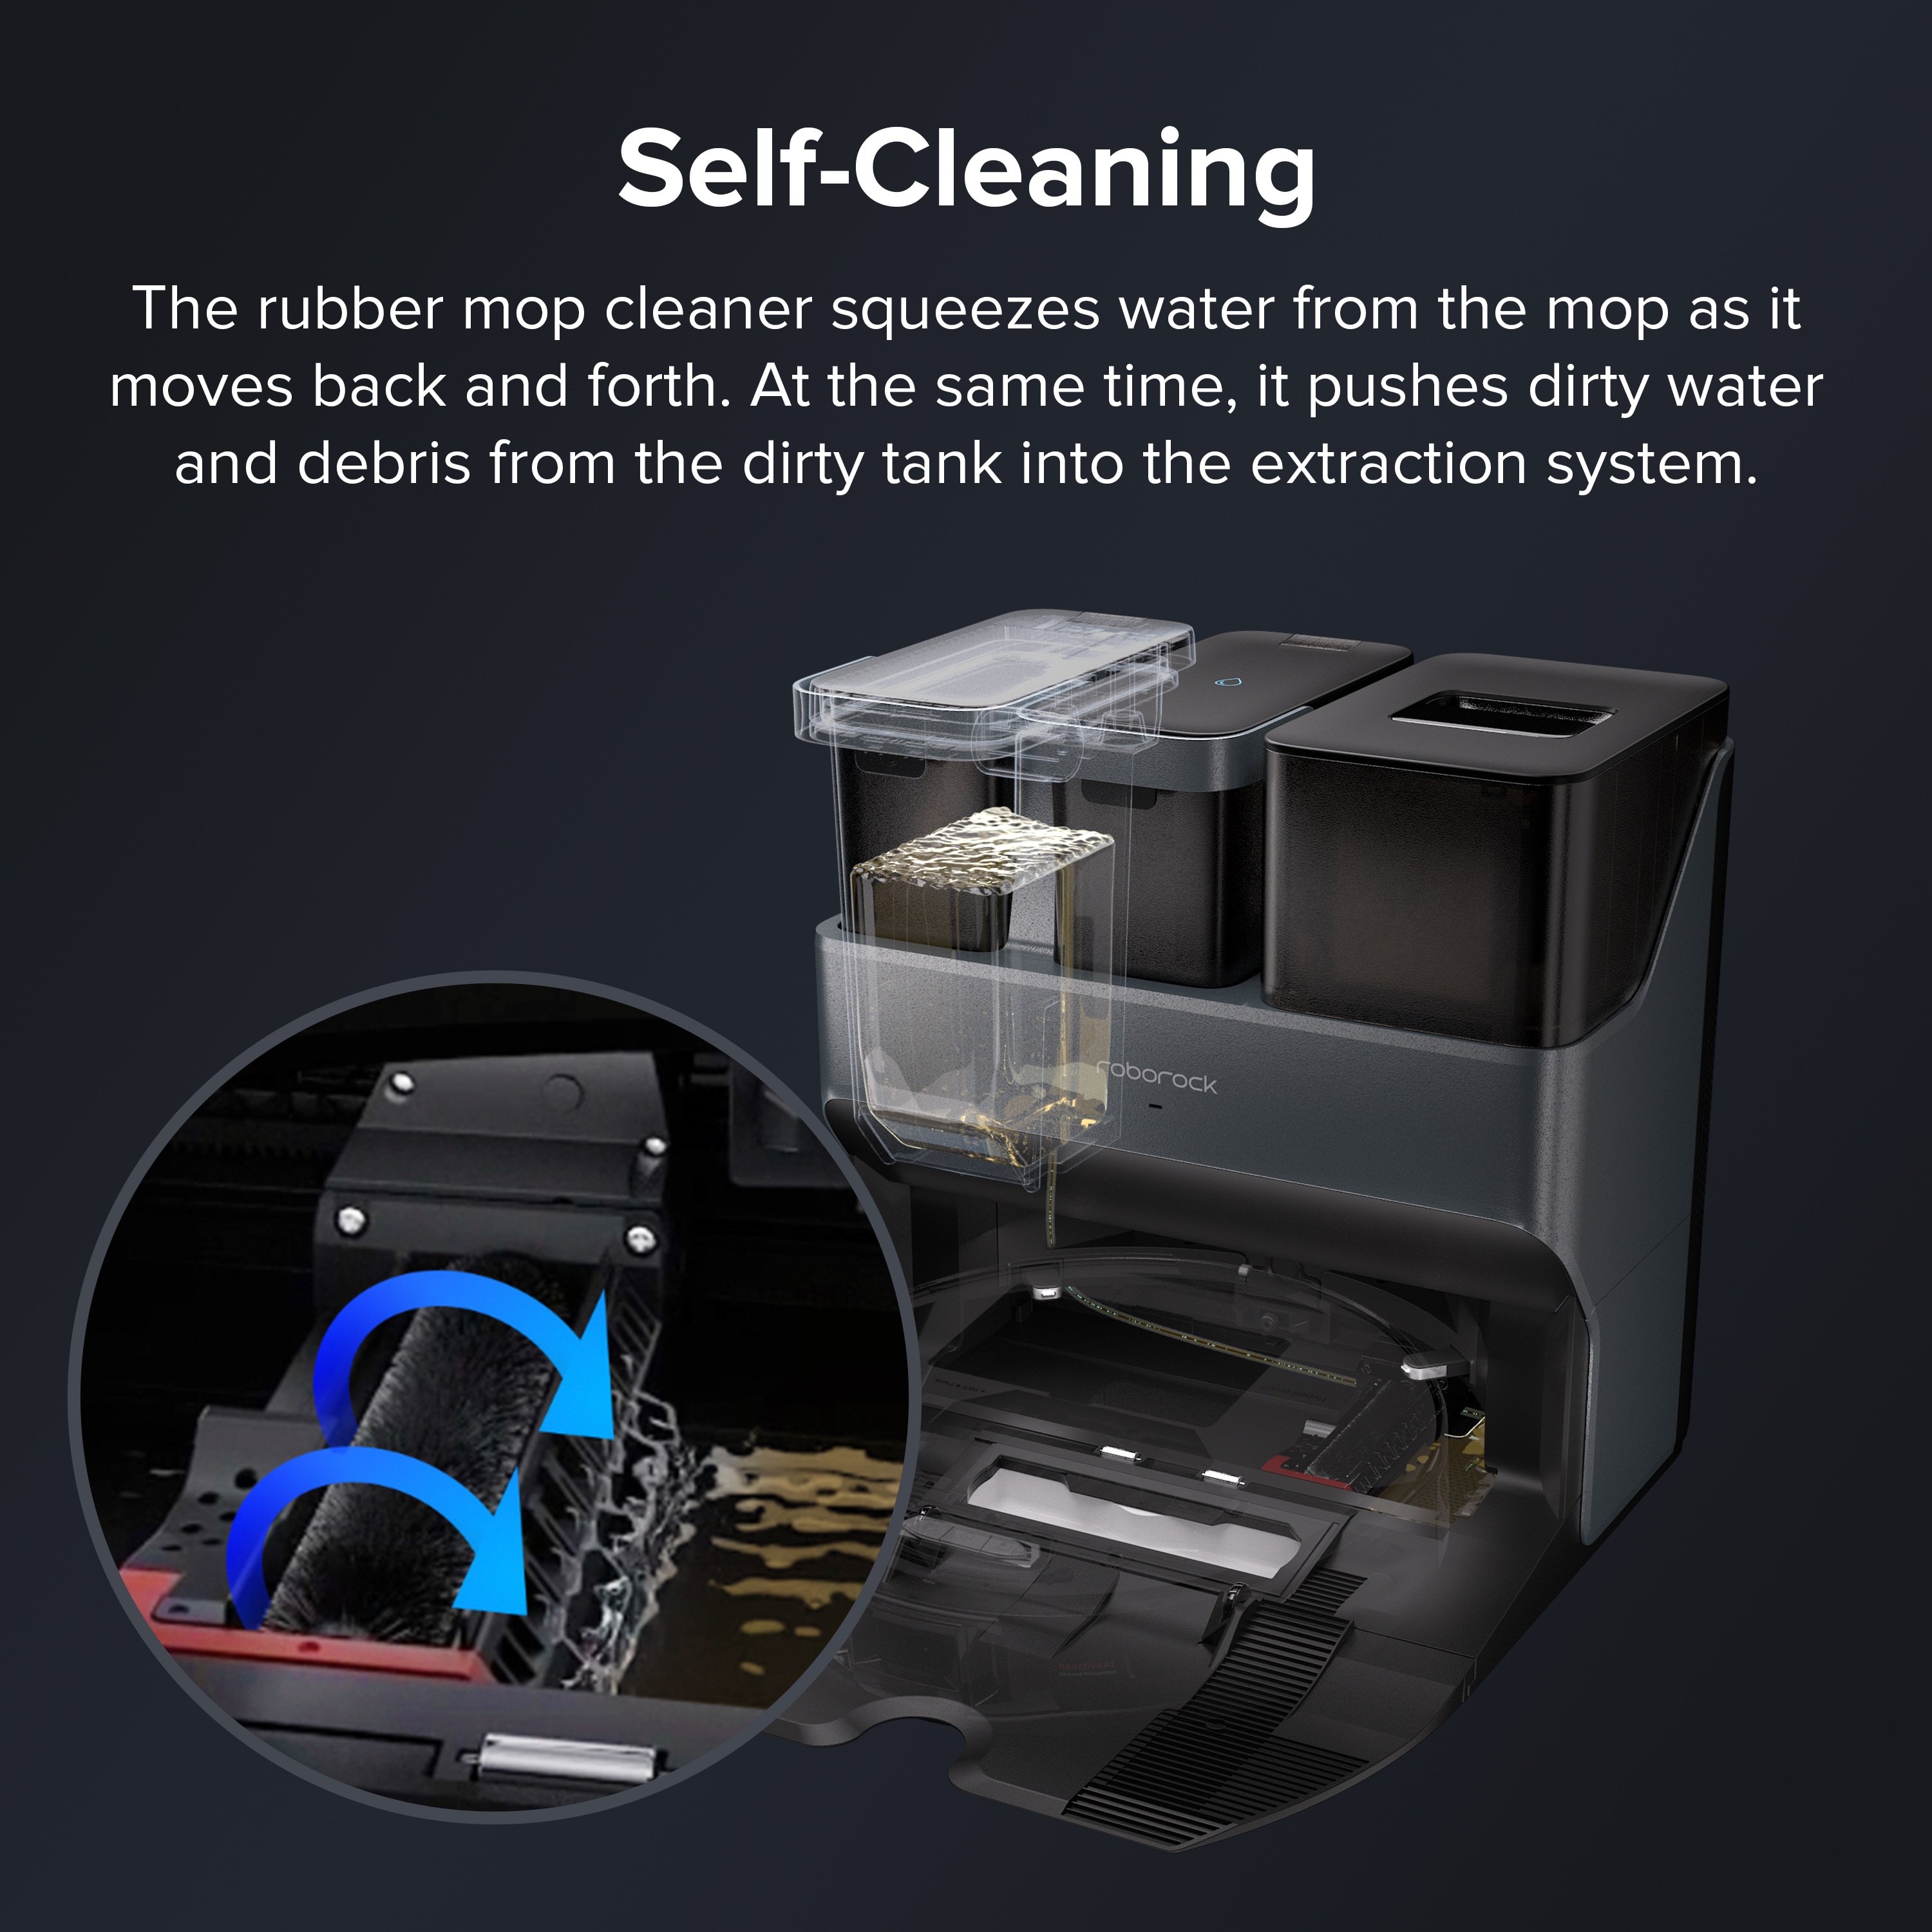 Roborock S7 MaxV Ultra Auto Charging Pet Robotic Vacuum and Mop Self  Emptying at